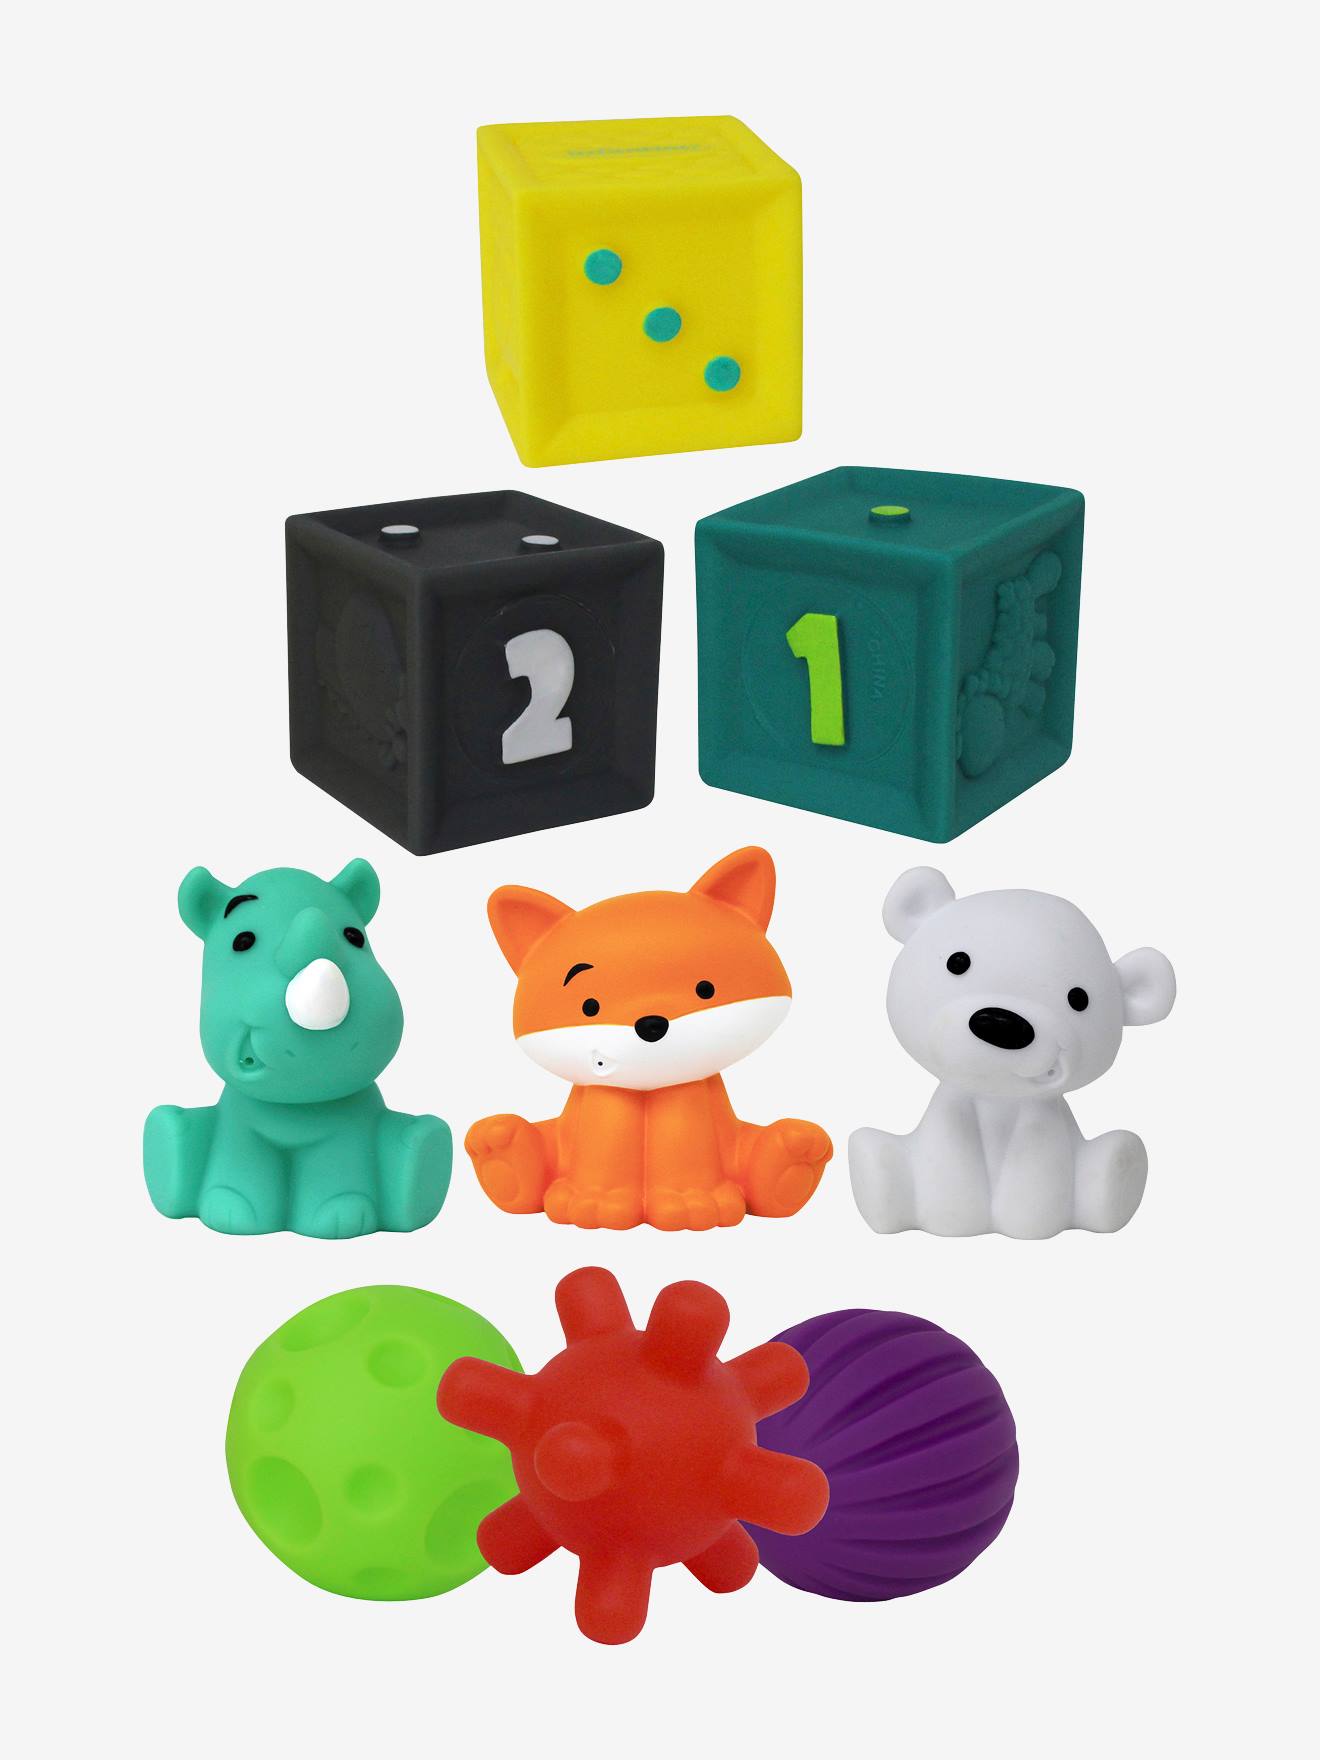 Infantino - Speelset Tub O'toys - Badspeelgoed